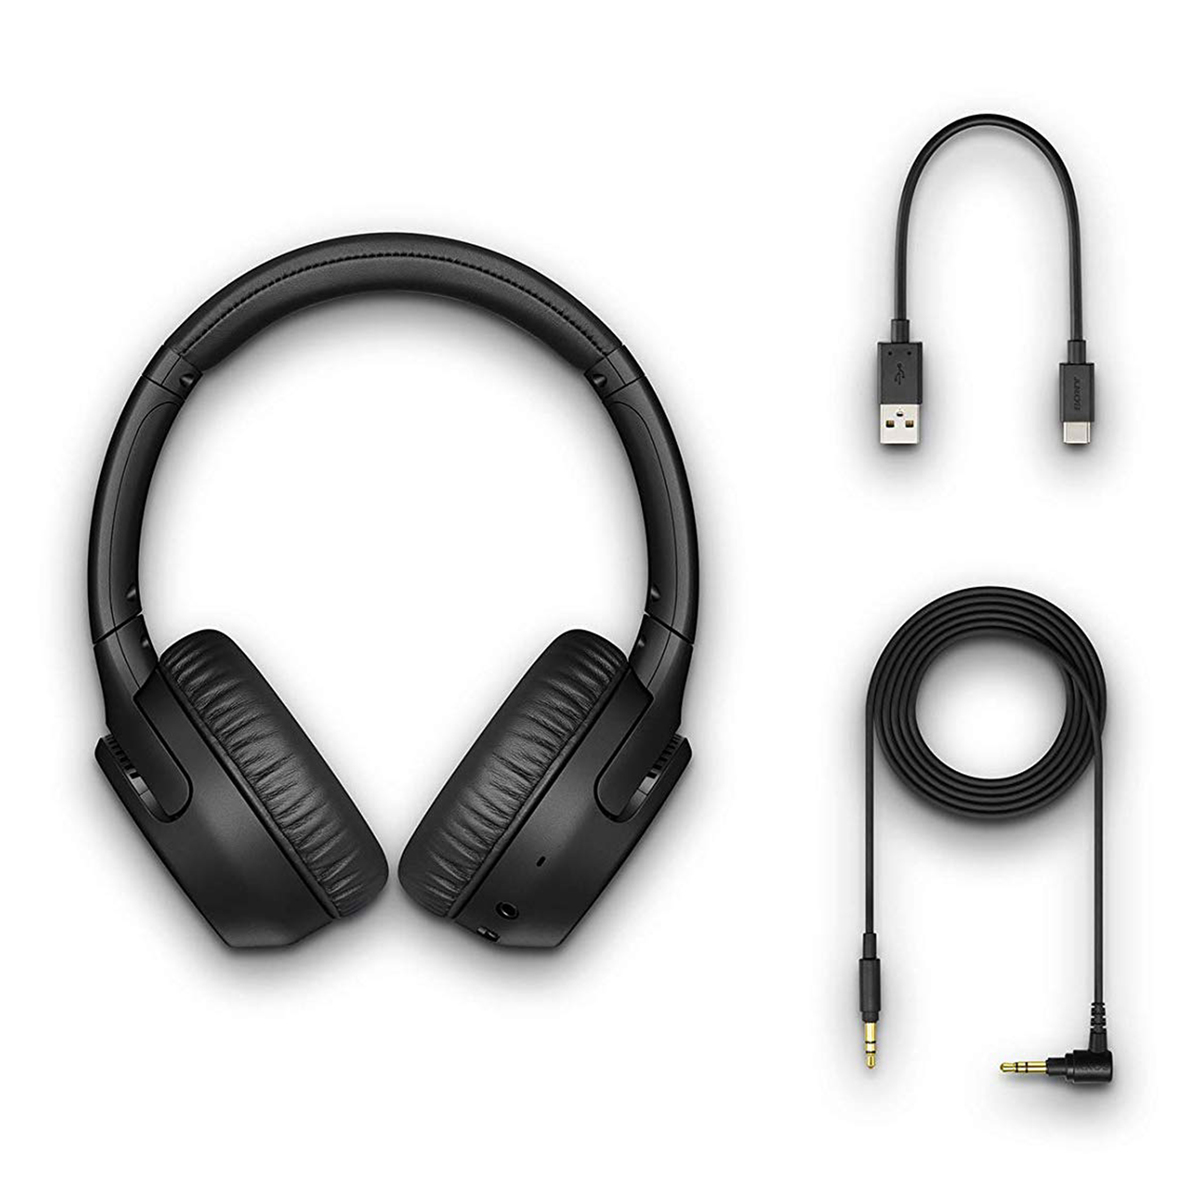 Sony Extra Bass Wireless Bluetooth Headphones WH-XB700 Black